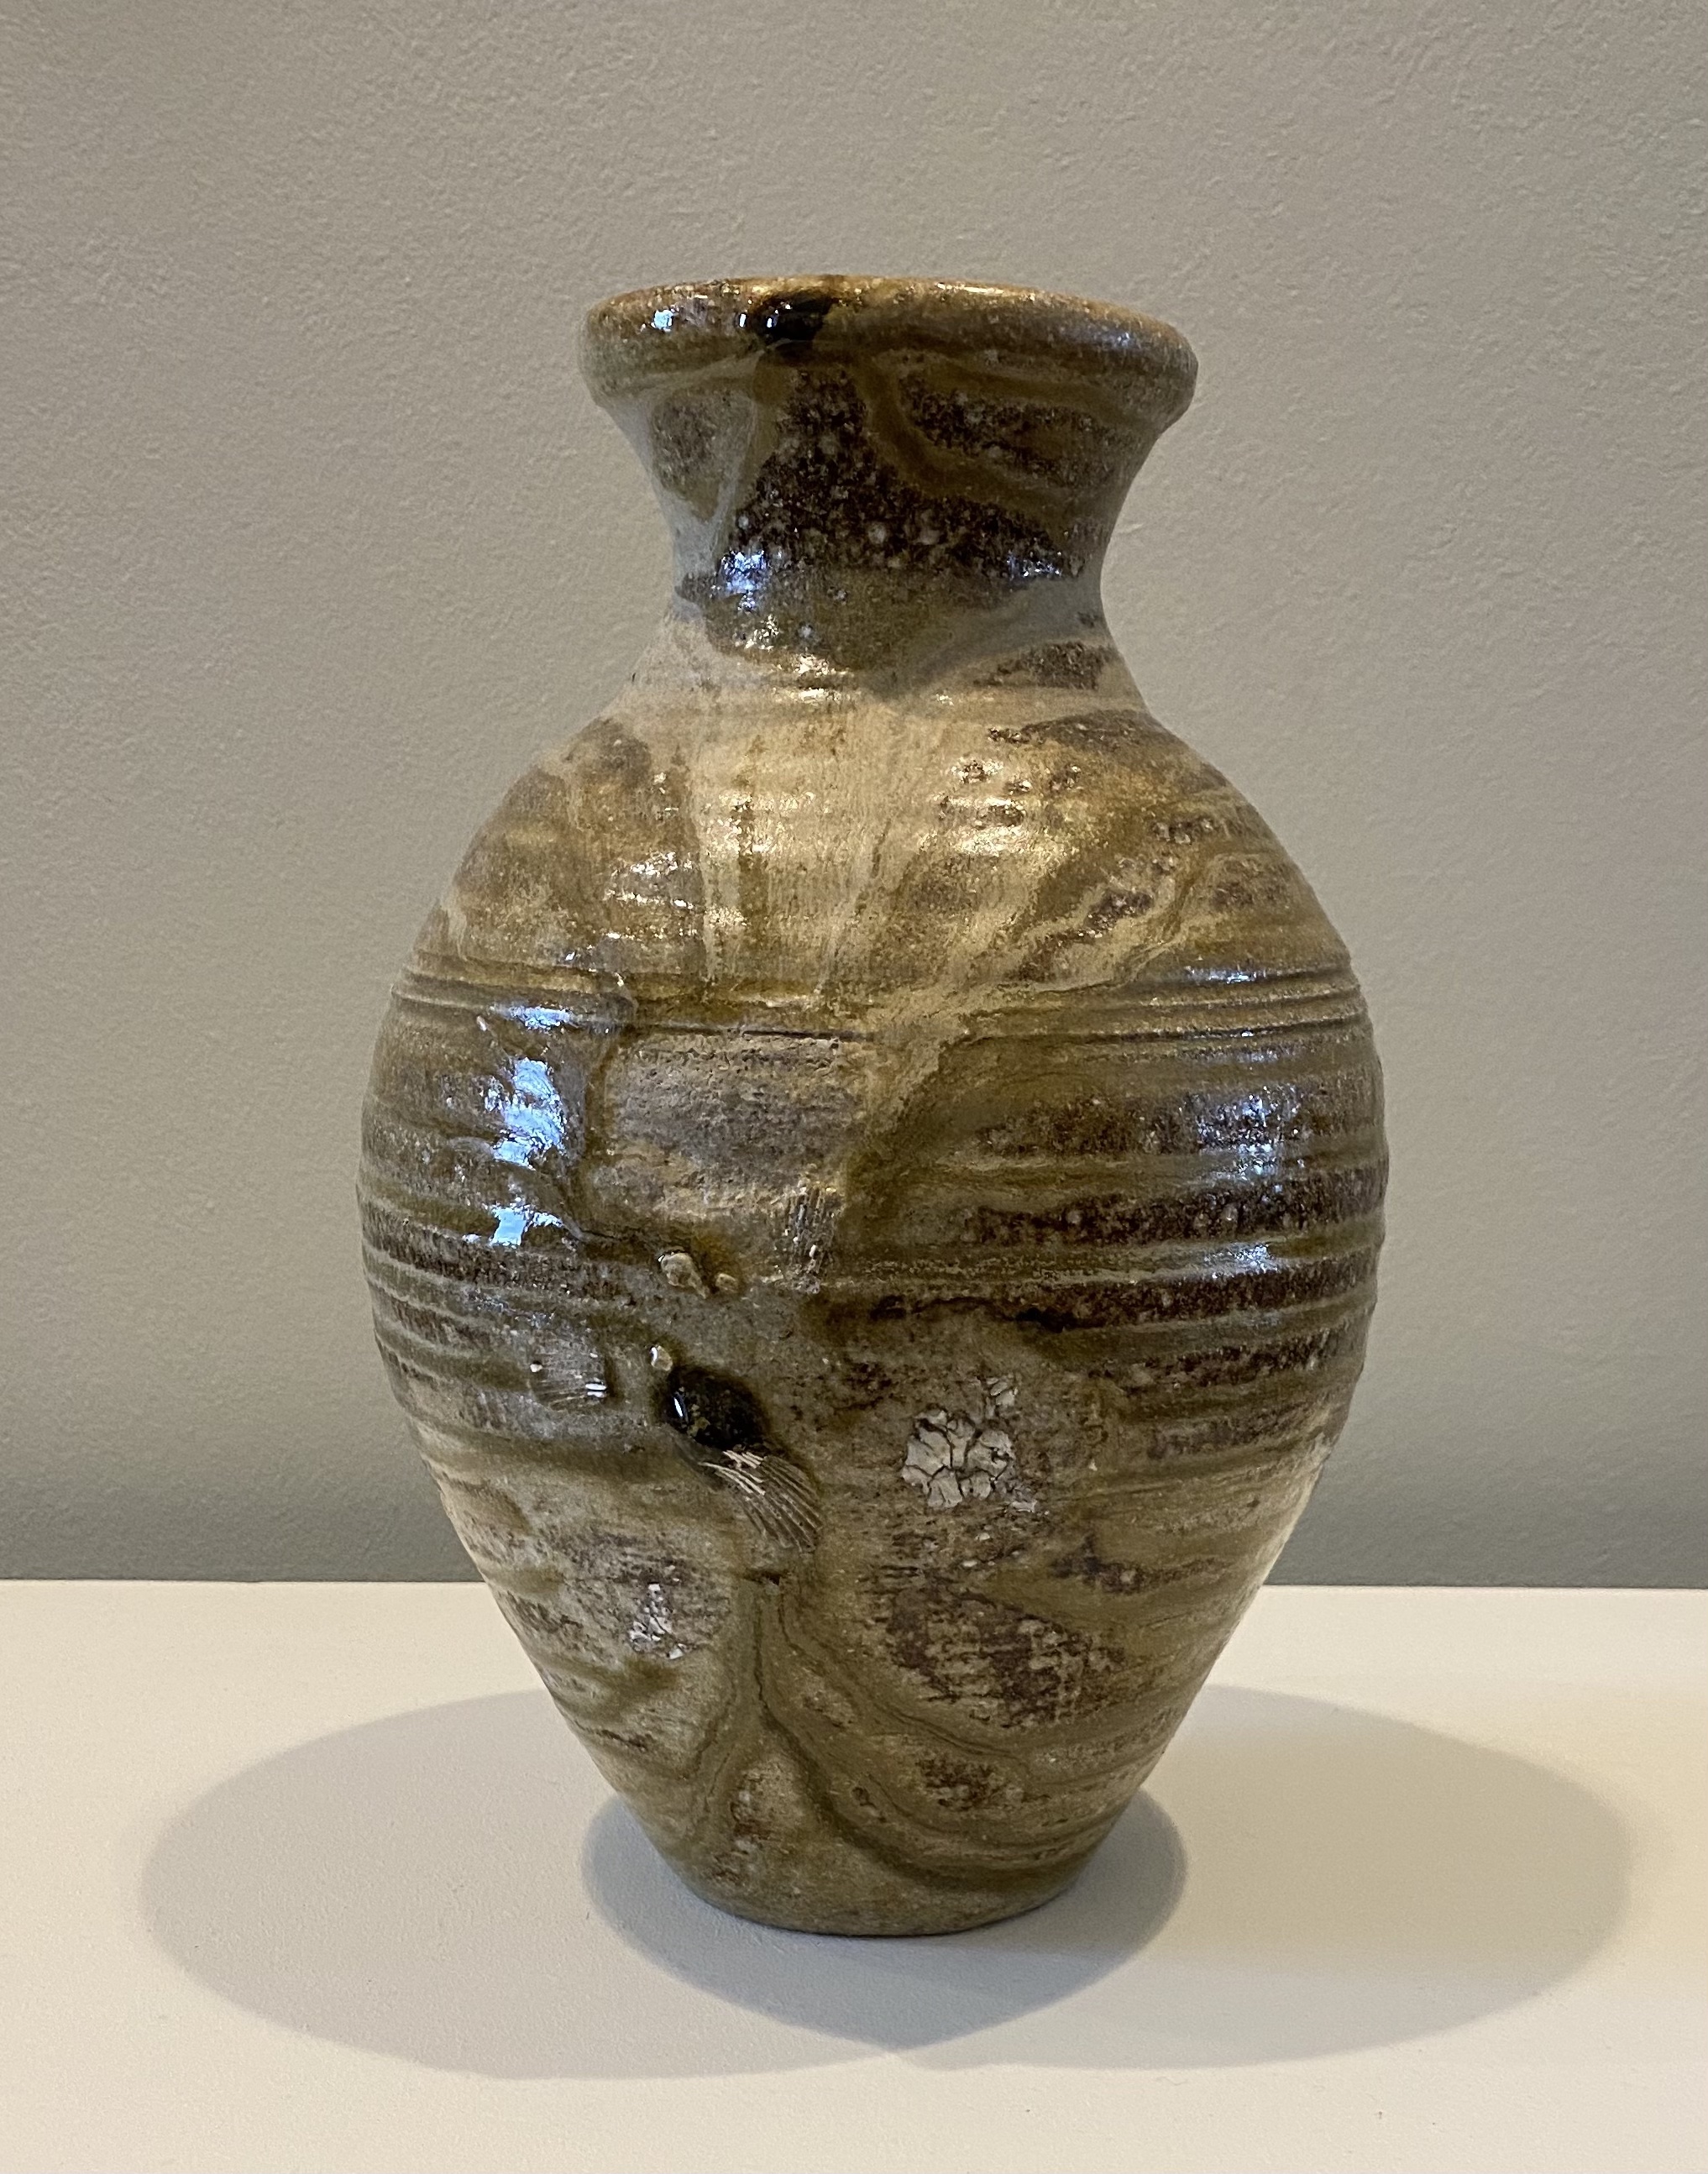 Vase
wood/salt-fired stoneware
12"
$140.